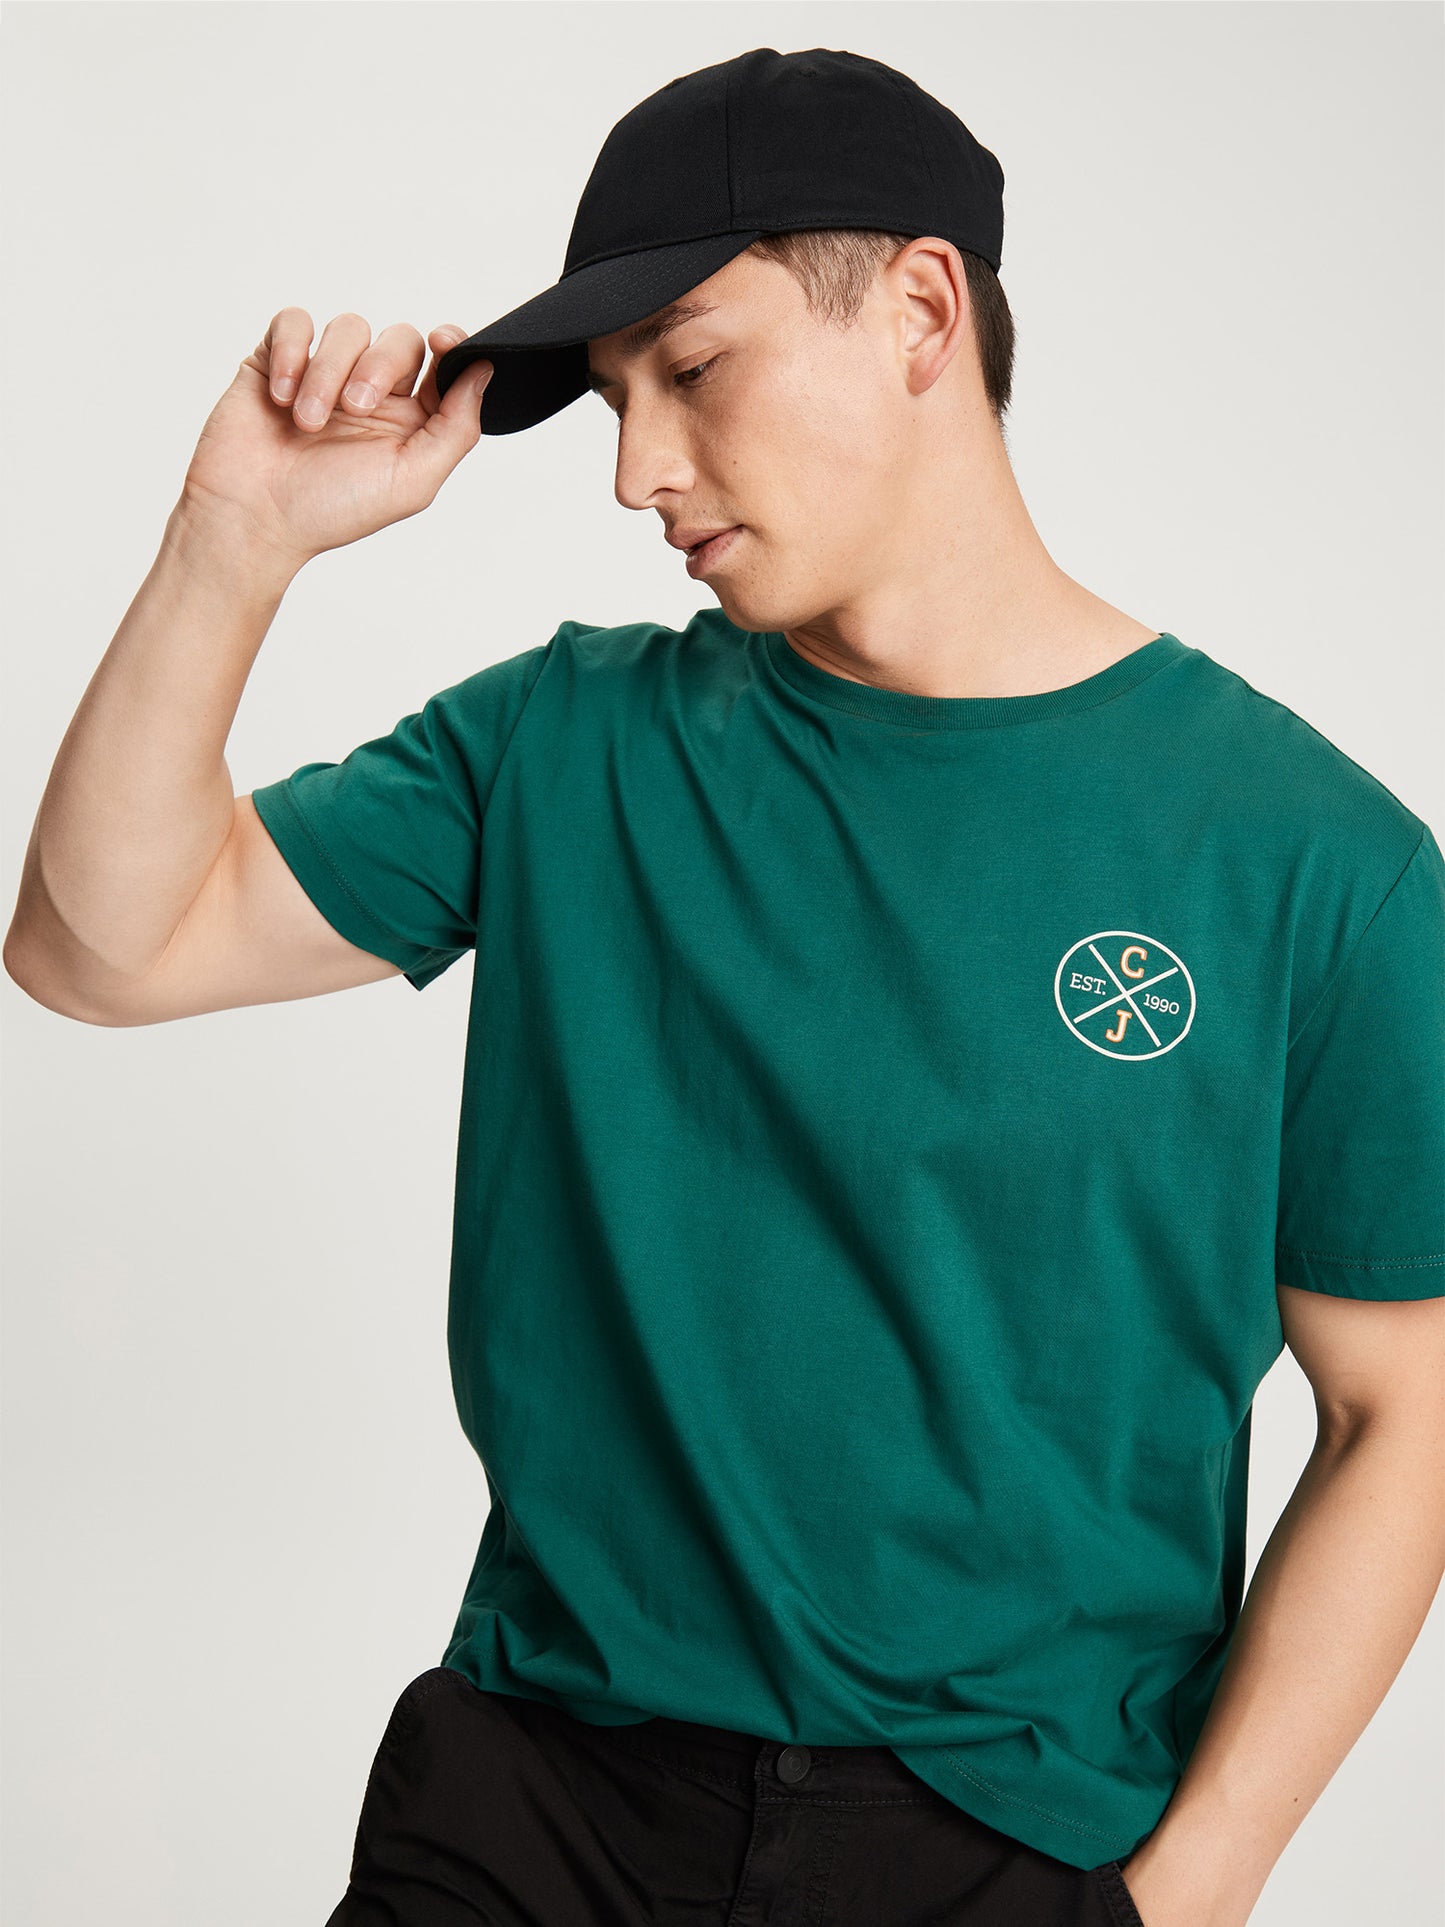 Men's regular T-shirt with label emblem green.